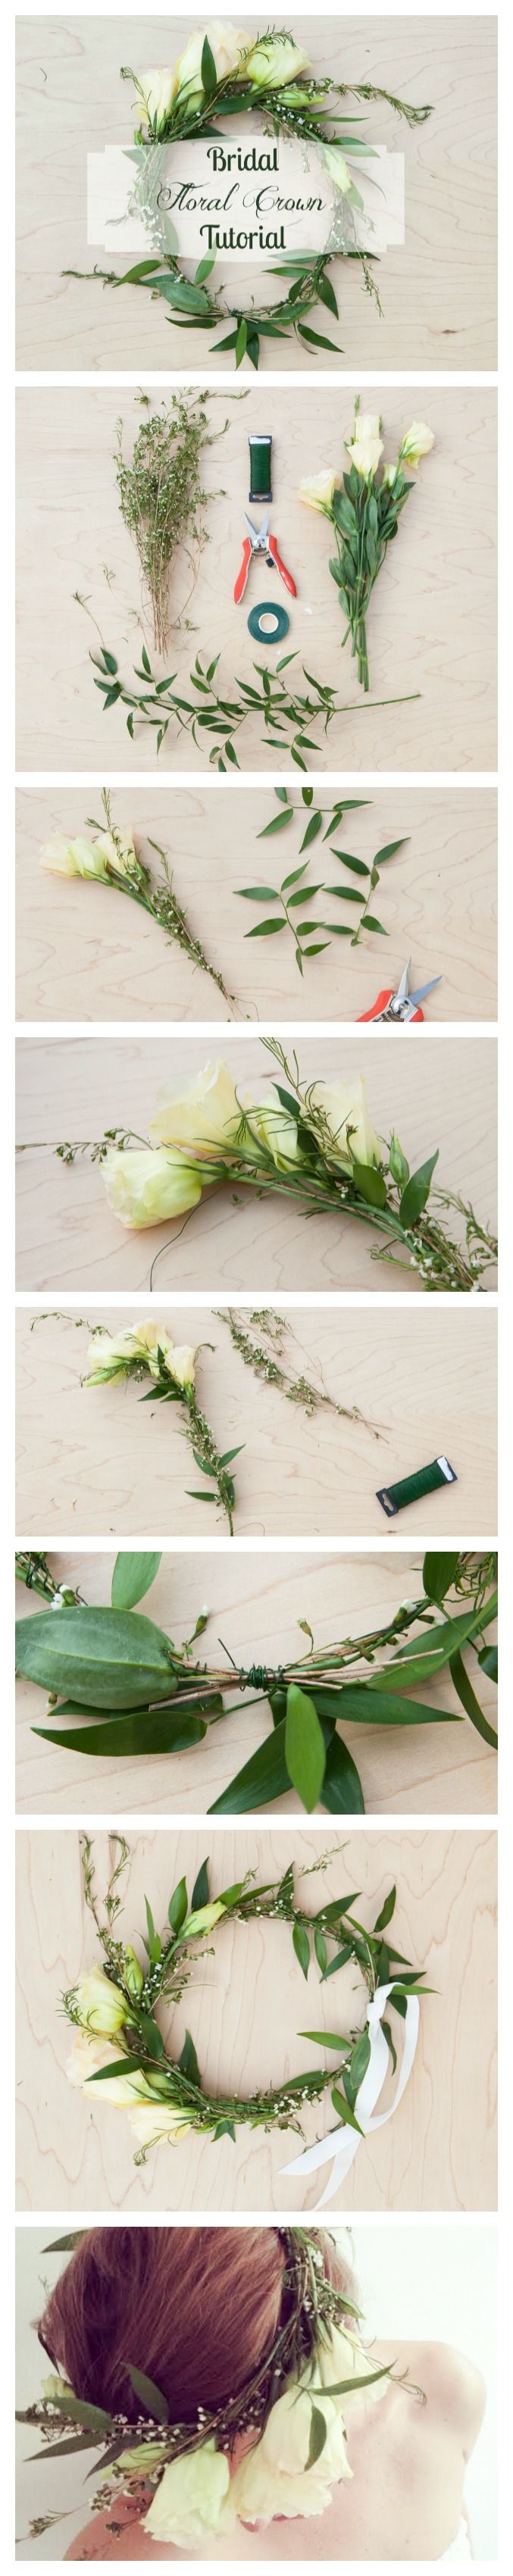 DIY wedding - how to make a flower crown